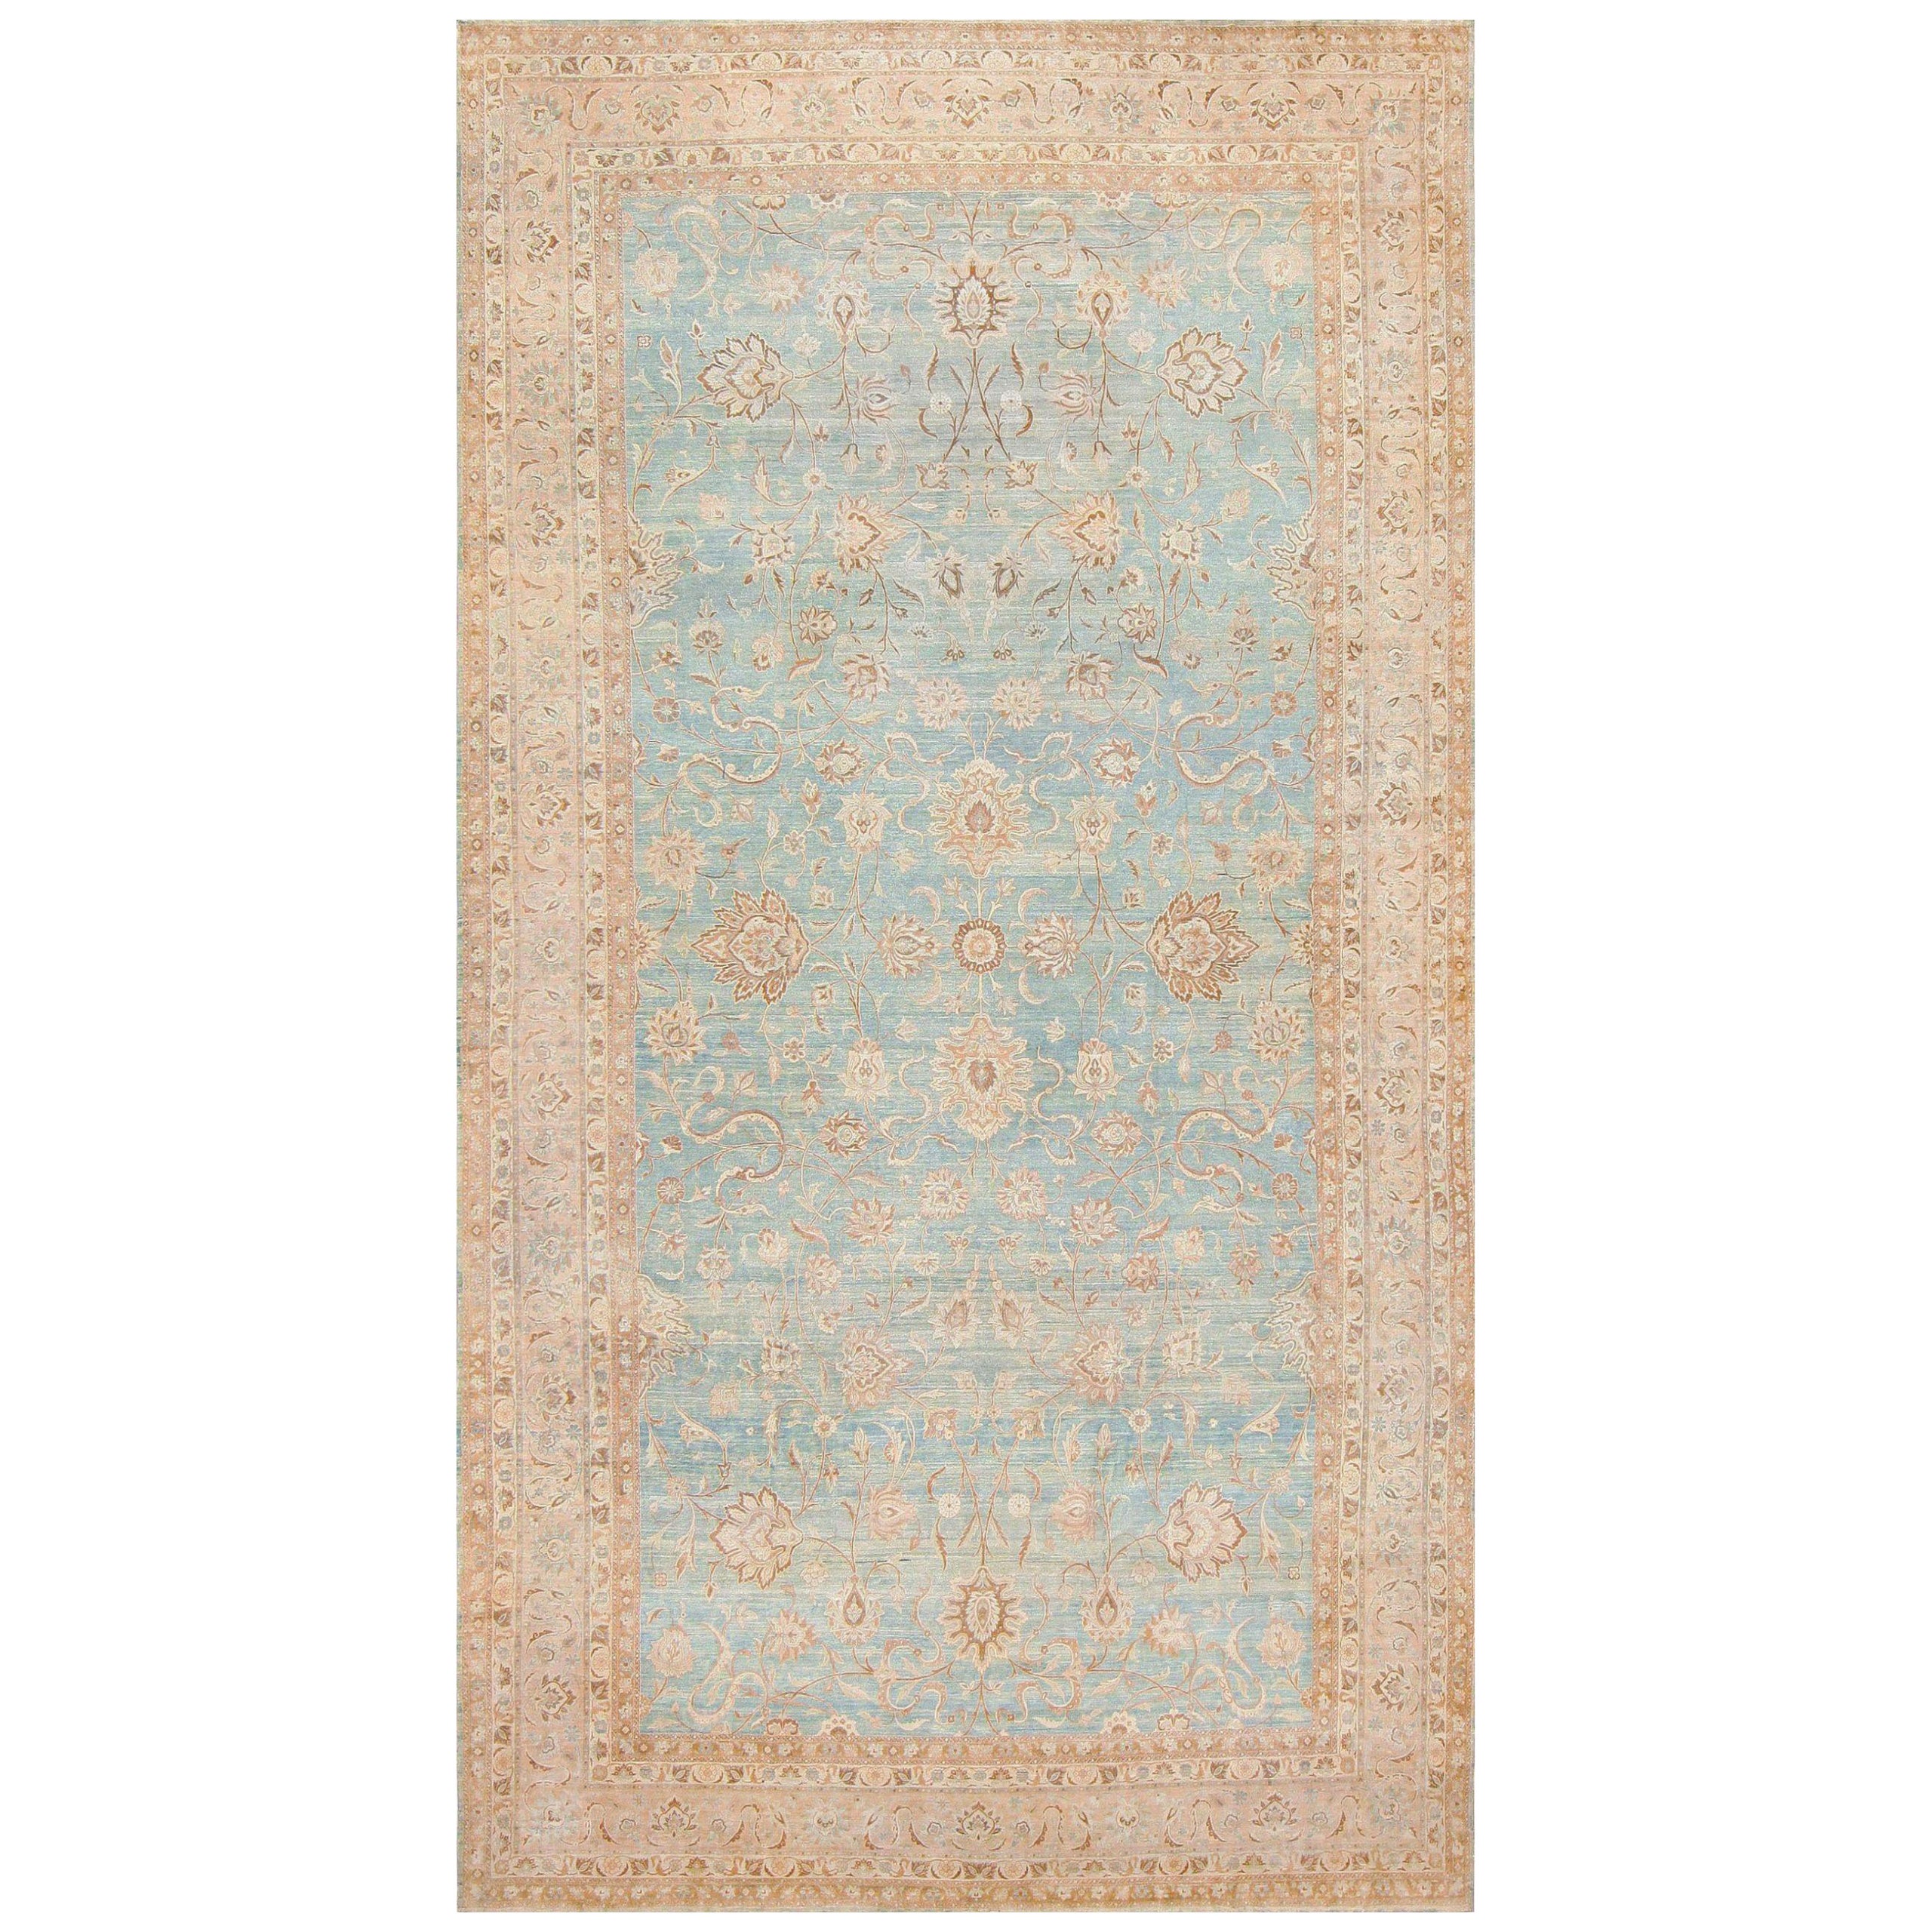 Antique Sky Blue Persian Kerman Carpet. 10 ft 9 in x 20 ft For Sale